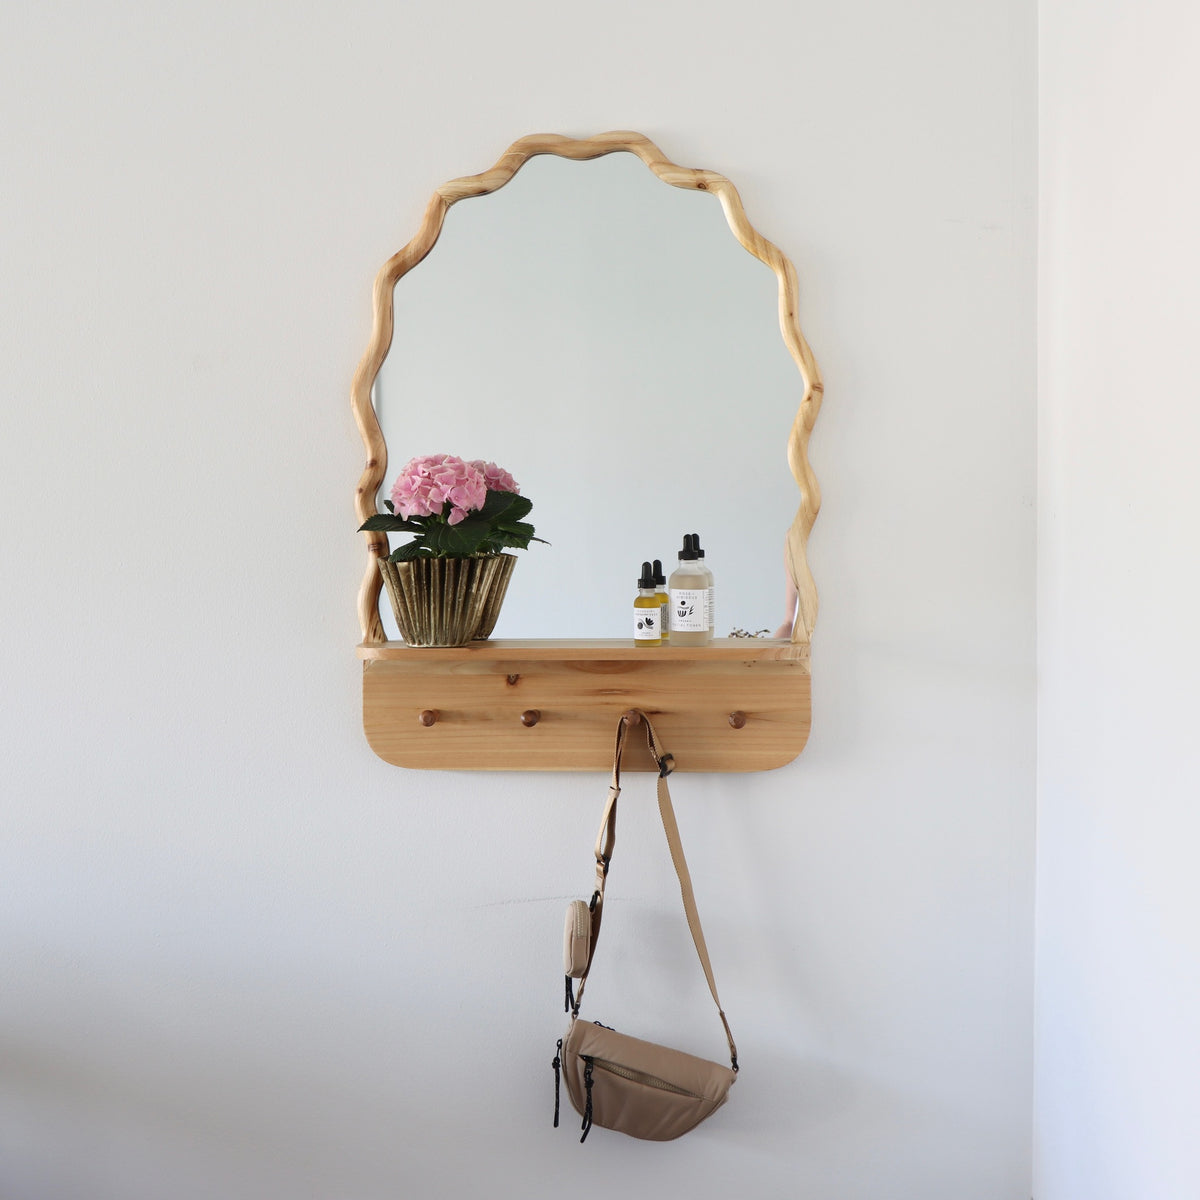 Squiggle Wood Framed Mirror with Hooks - Holistic Habitat 